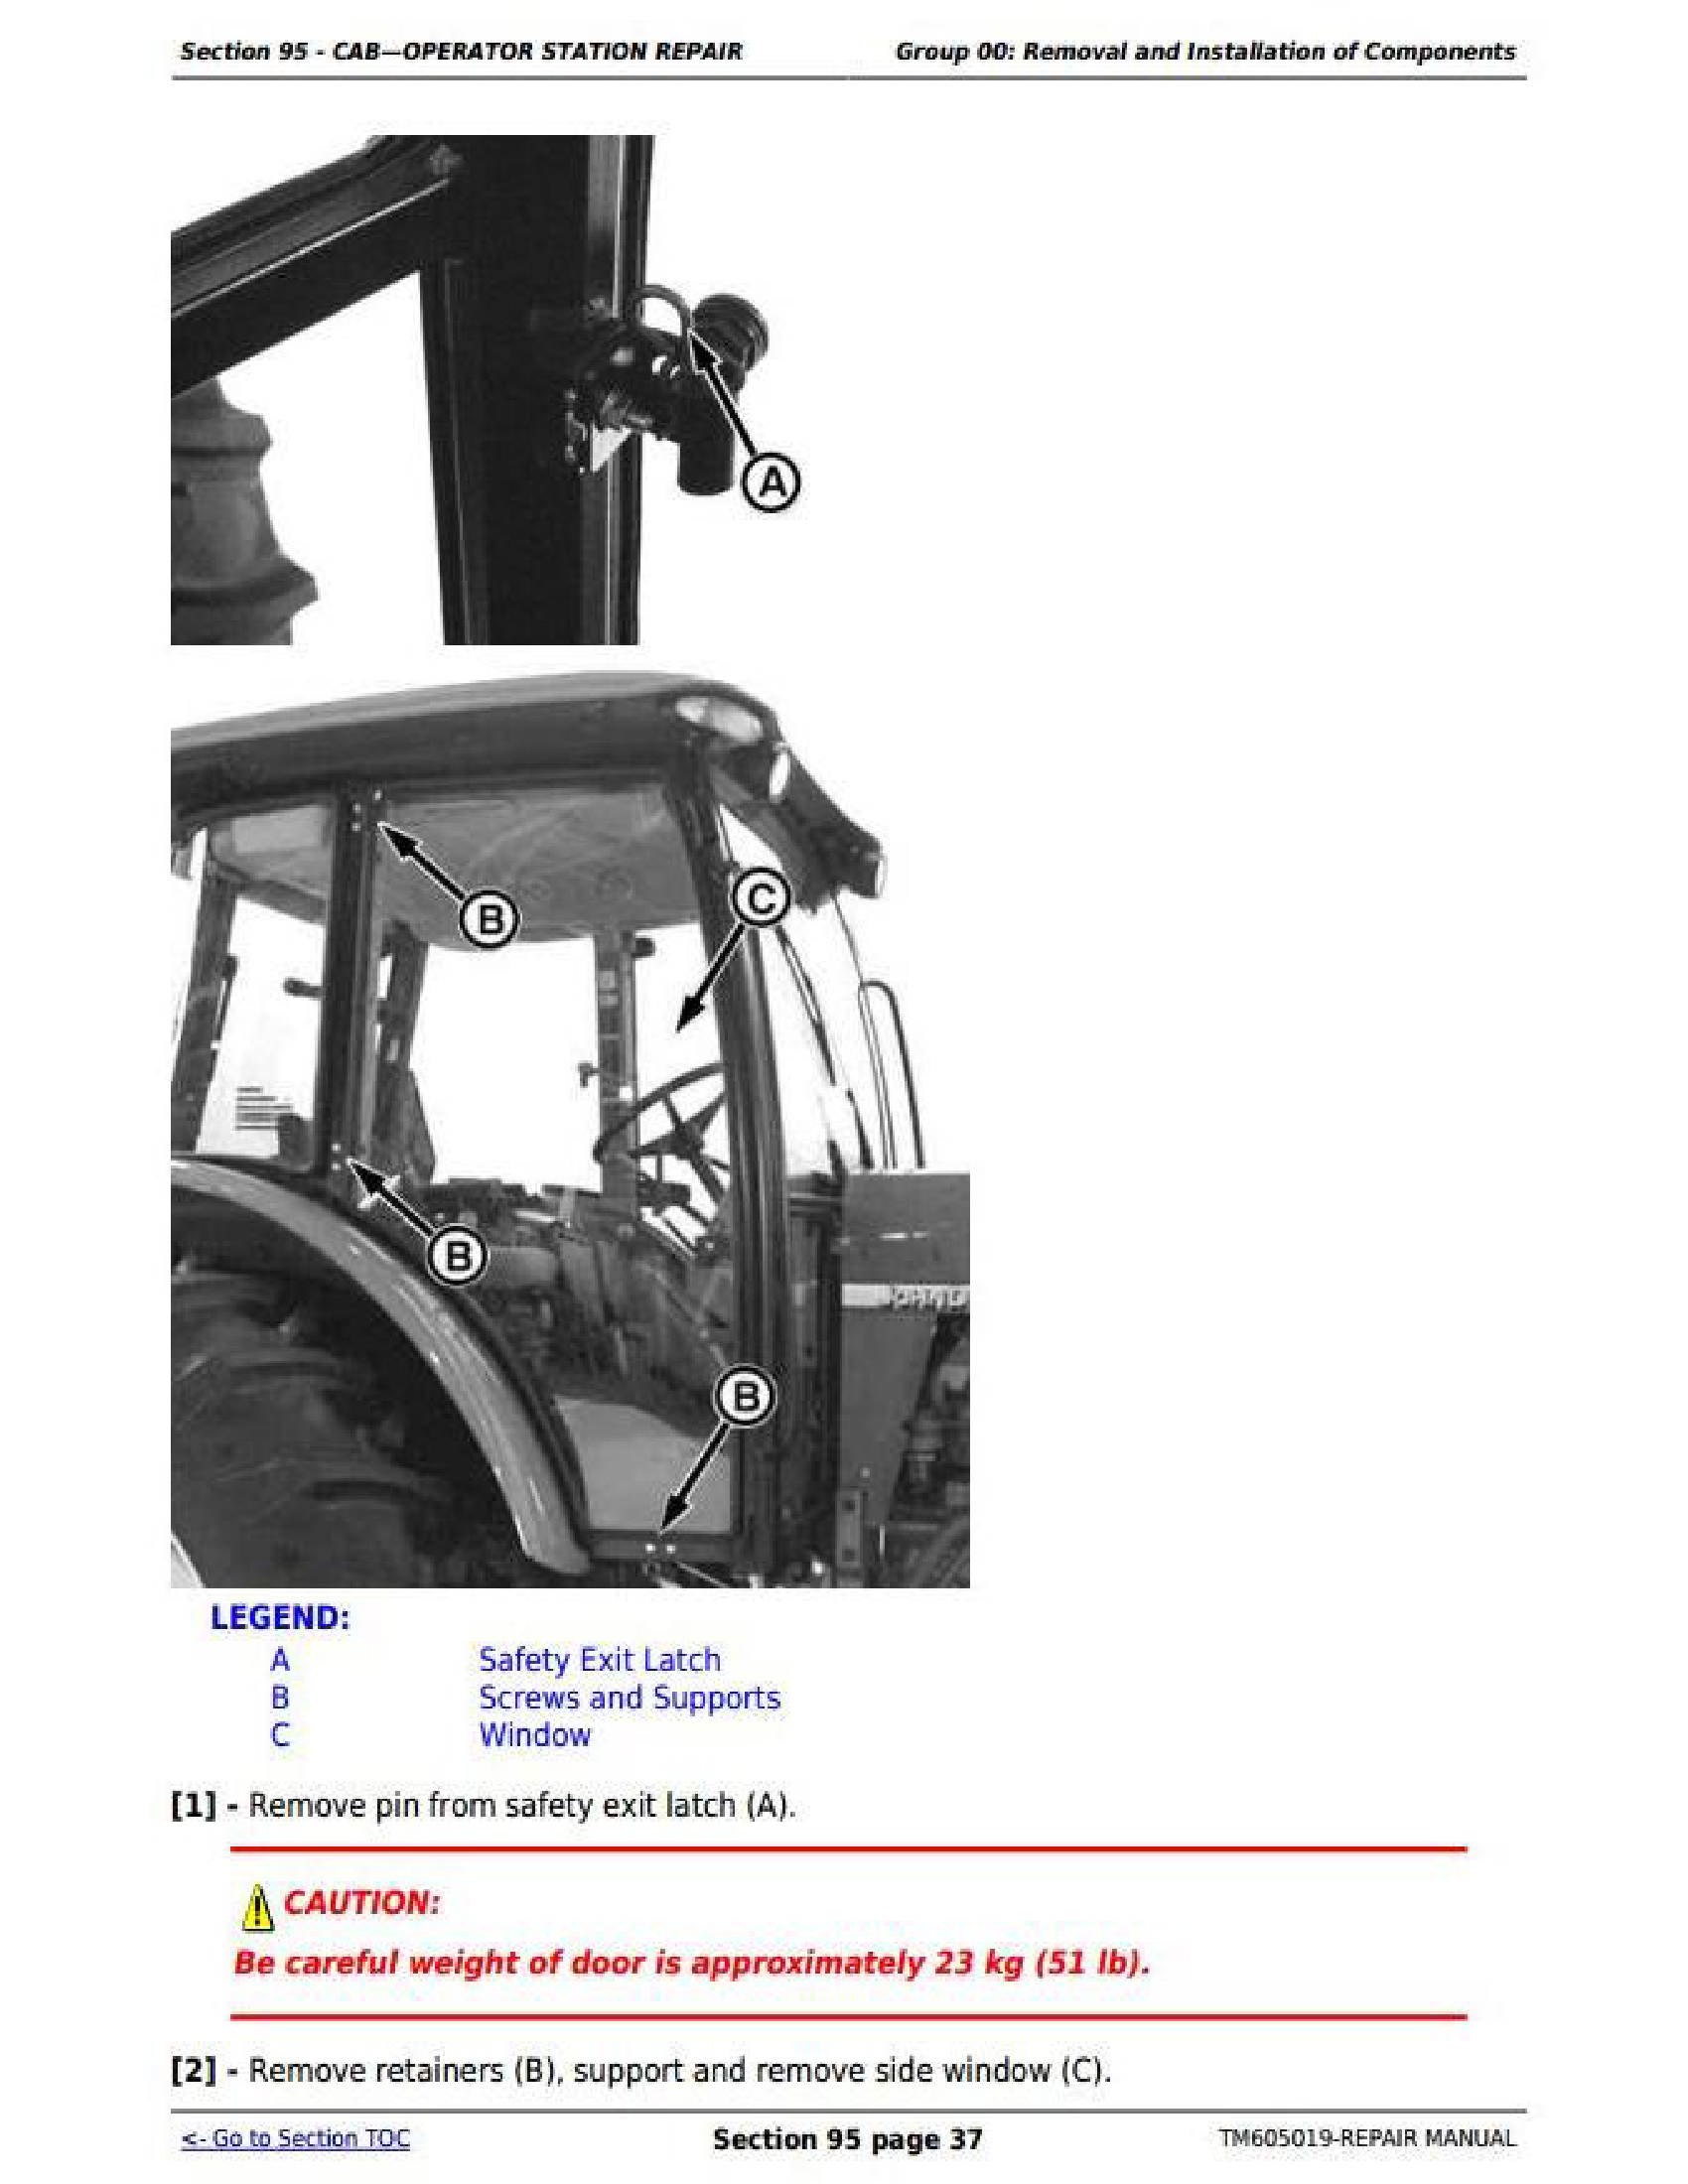 John Deere 320D manual pdf